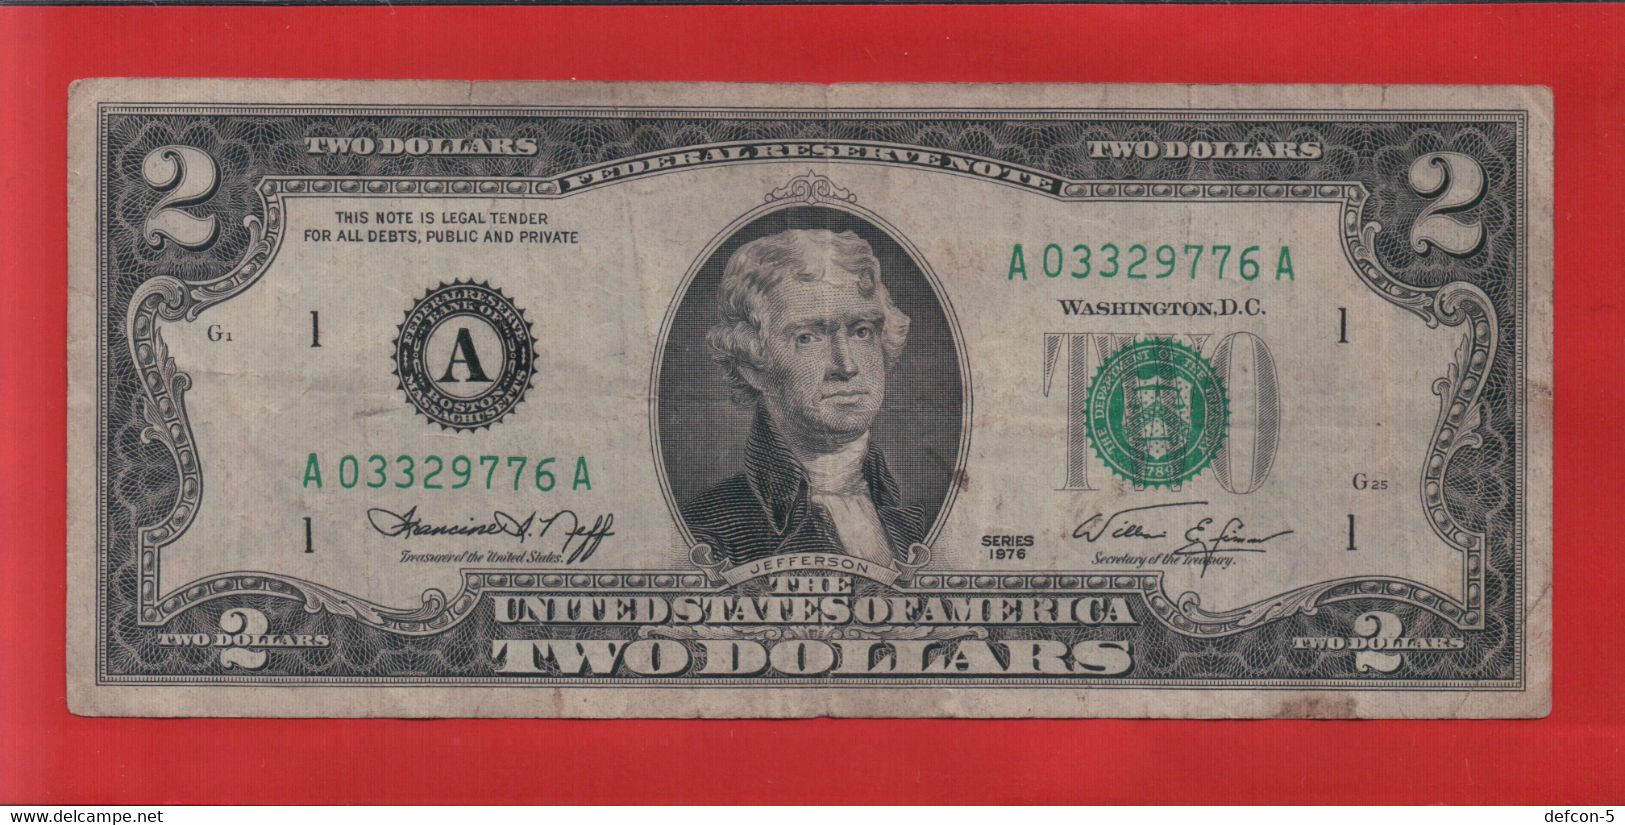 Rarität ! 2 US-Dollar [1976] > A 03329776 A < {$006-002} - National Currency